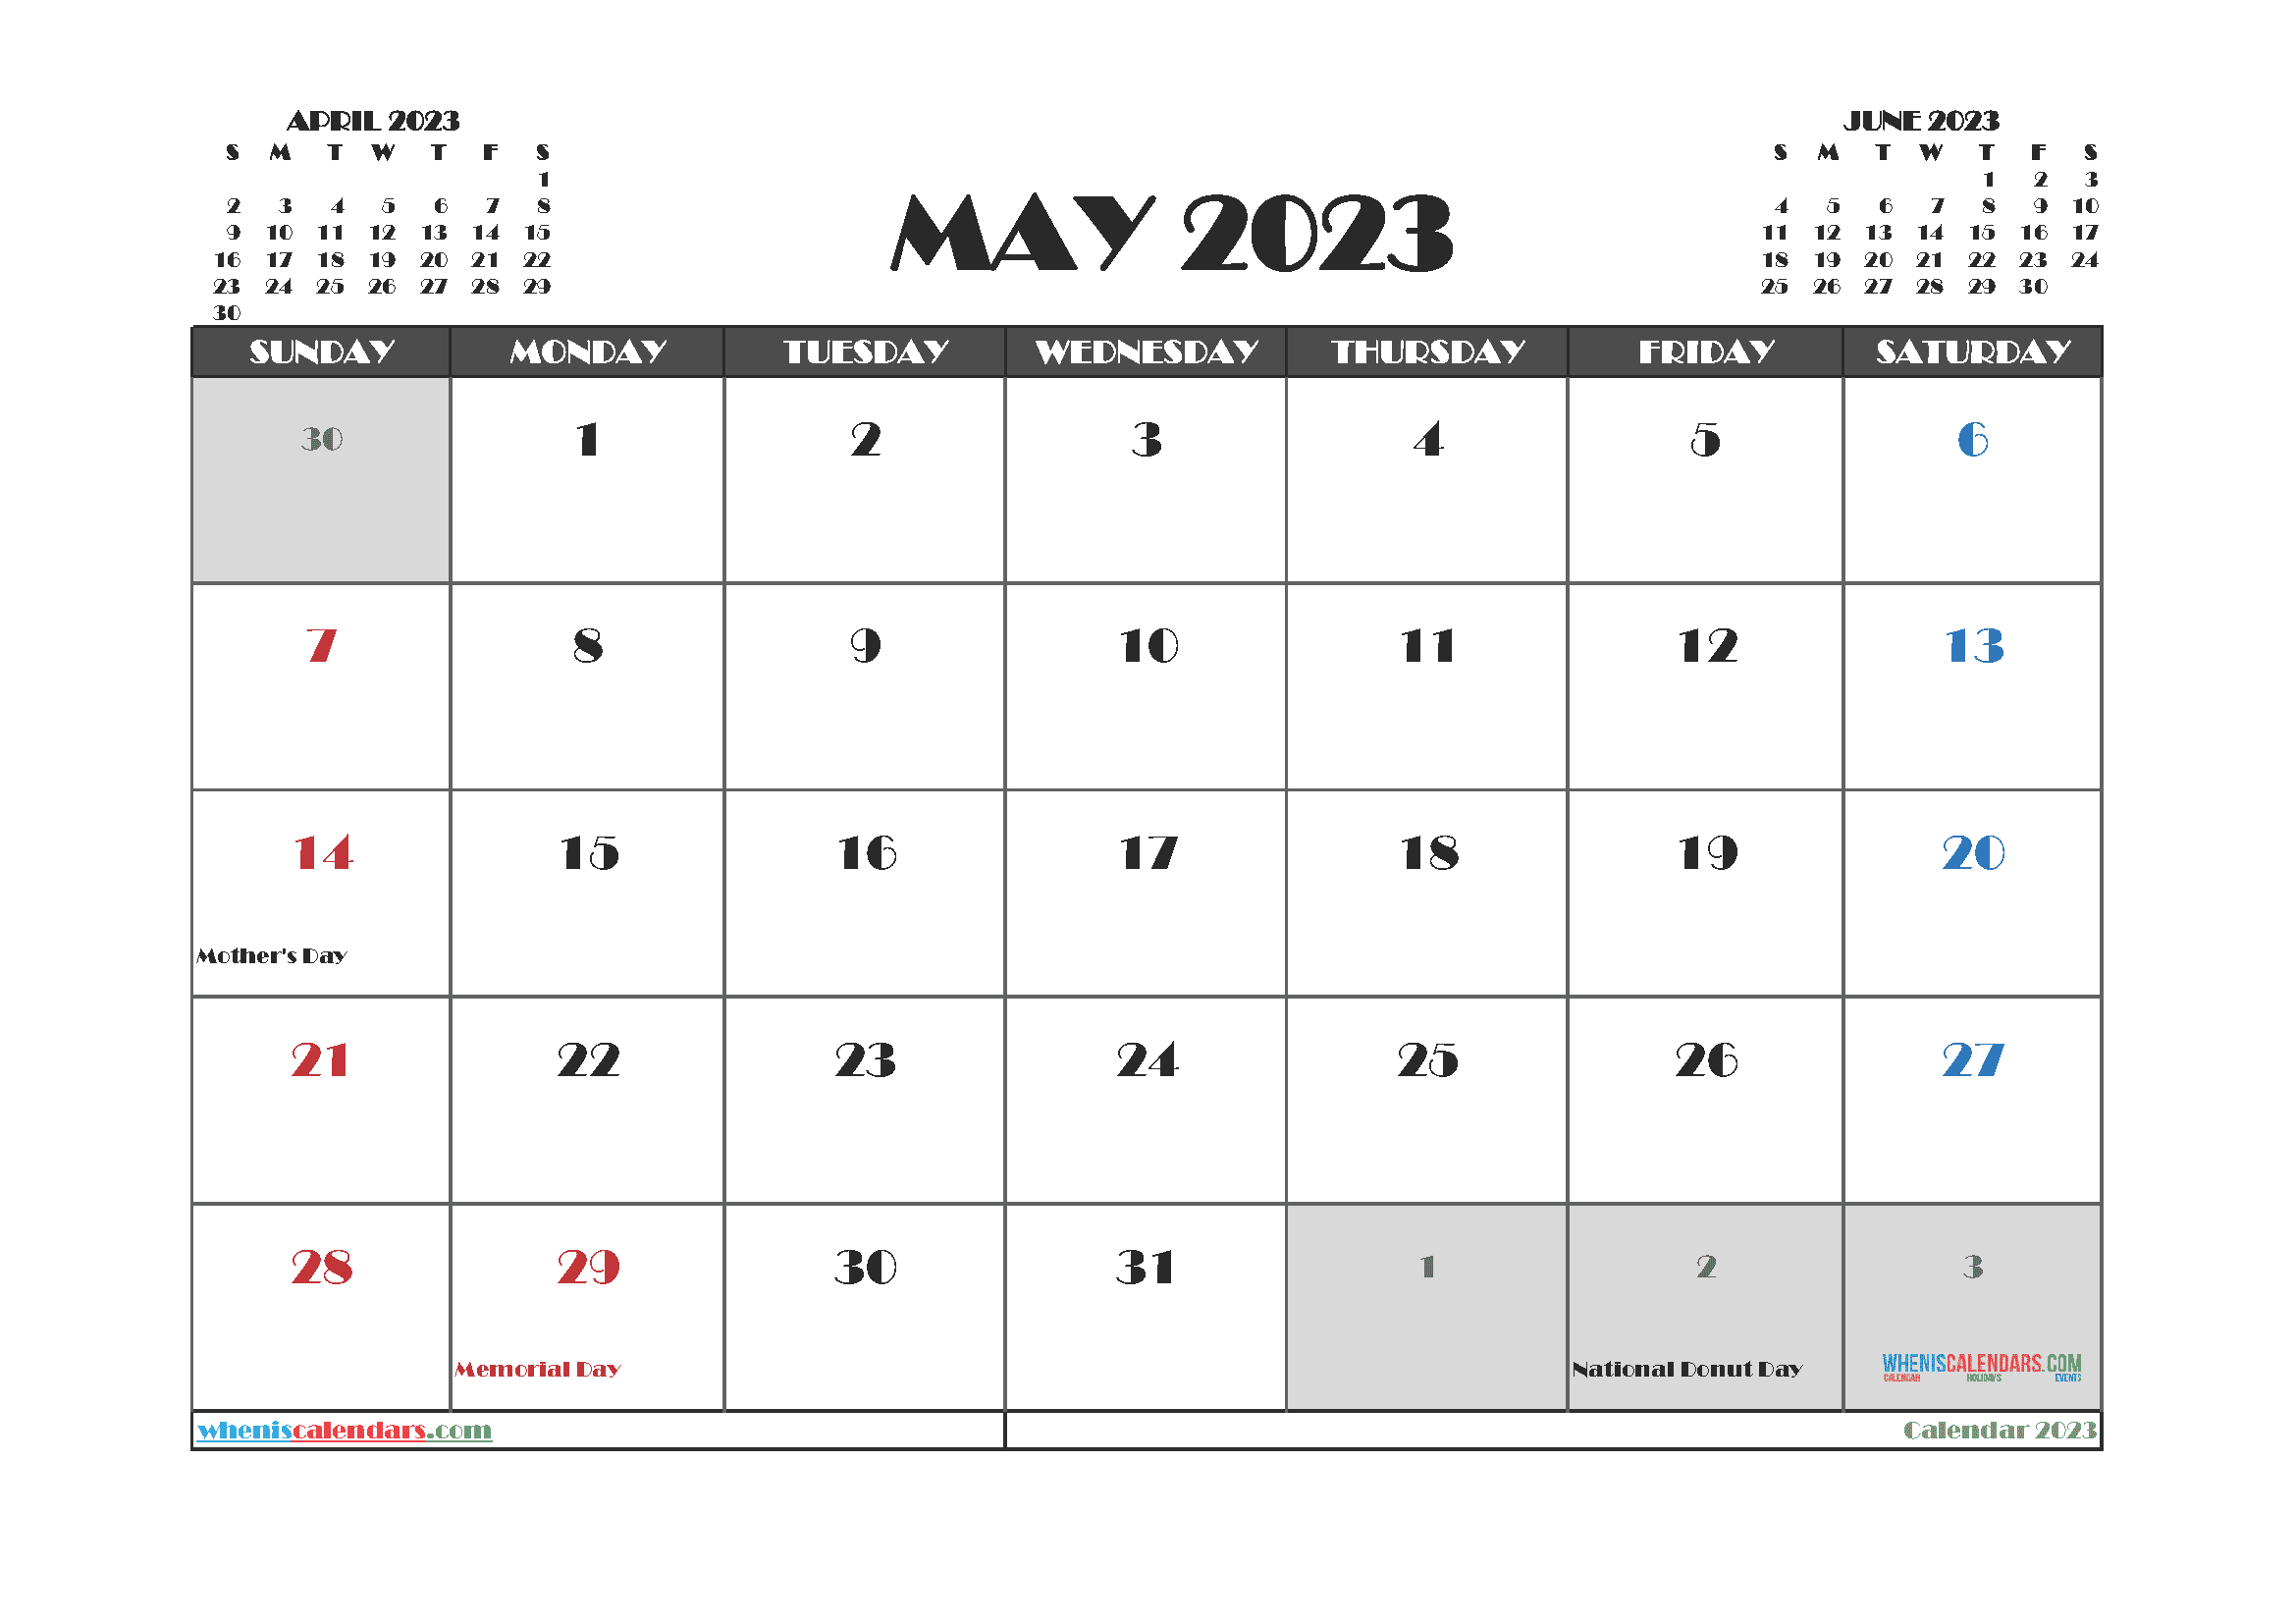 May 2023 Printable Calendar Free